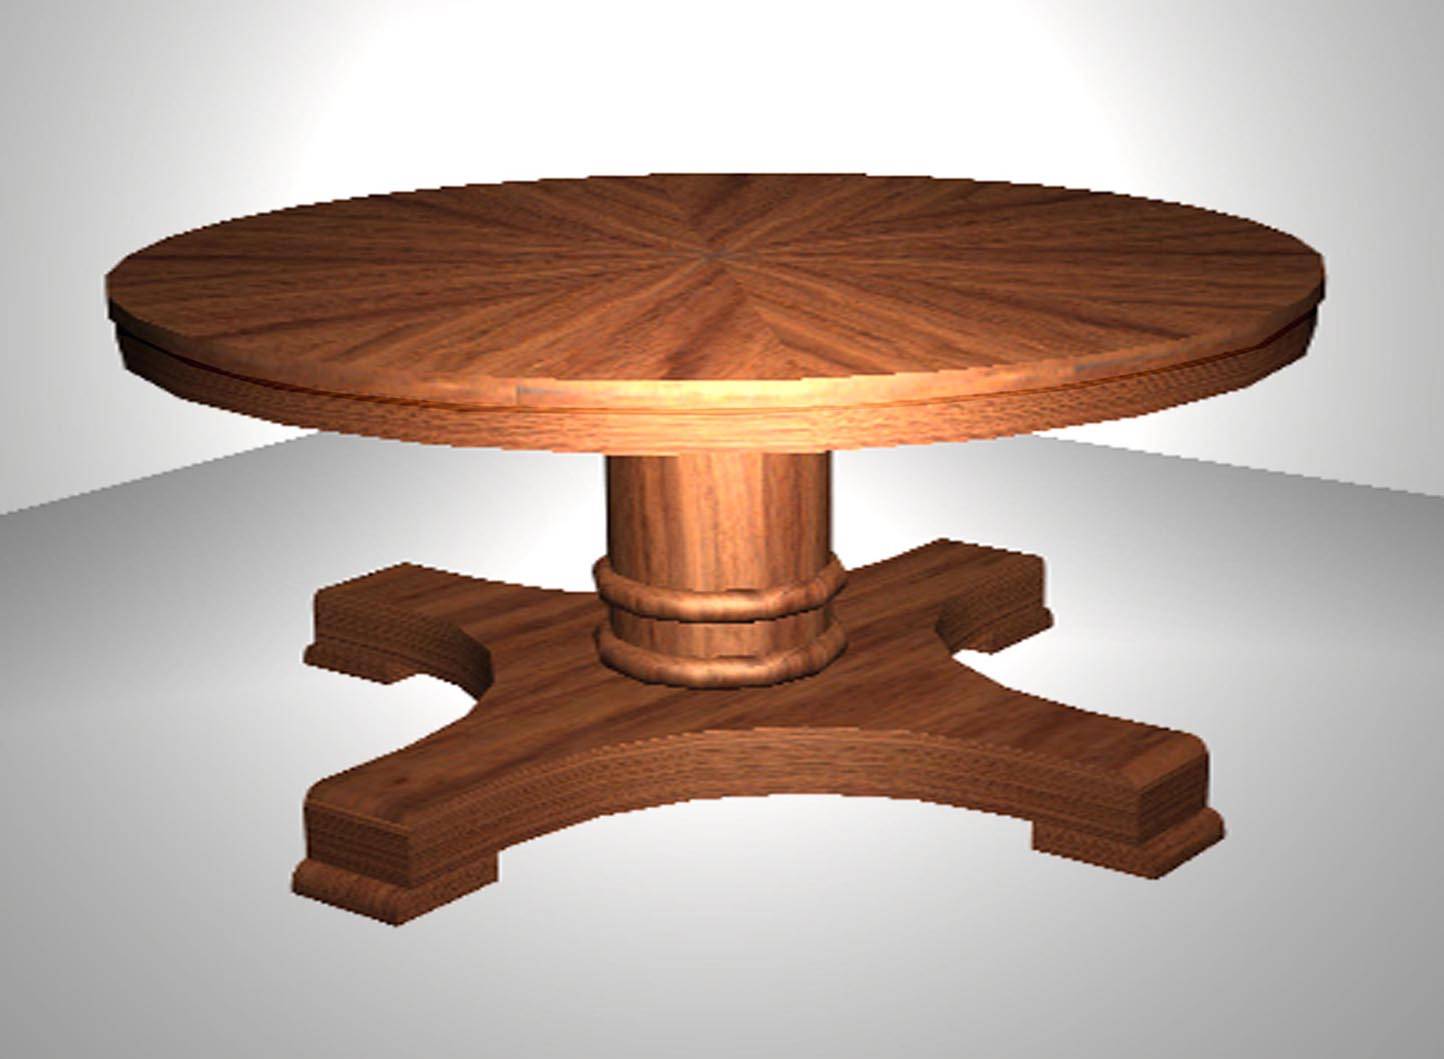 Сборка круглого стола. Круглый деревянный стол. Столик круглый. Круглый вращающийся стол. Круглый стол трансформер.